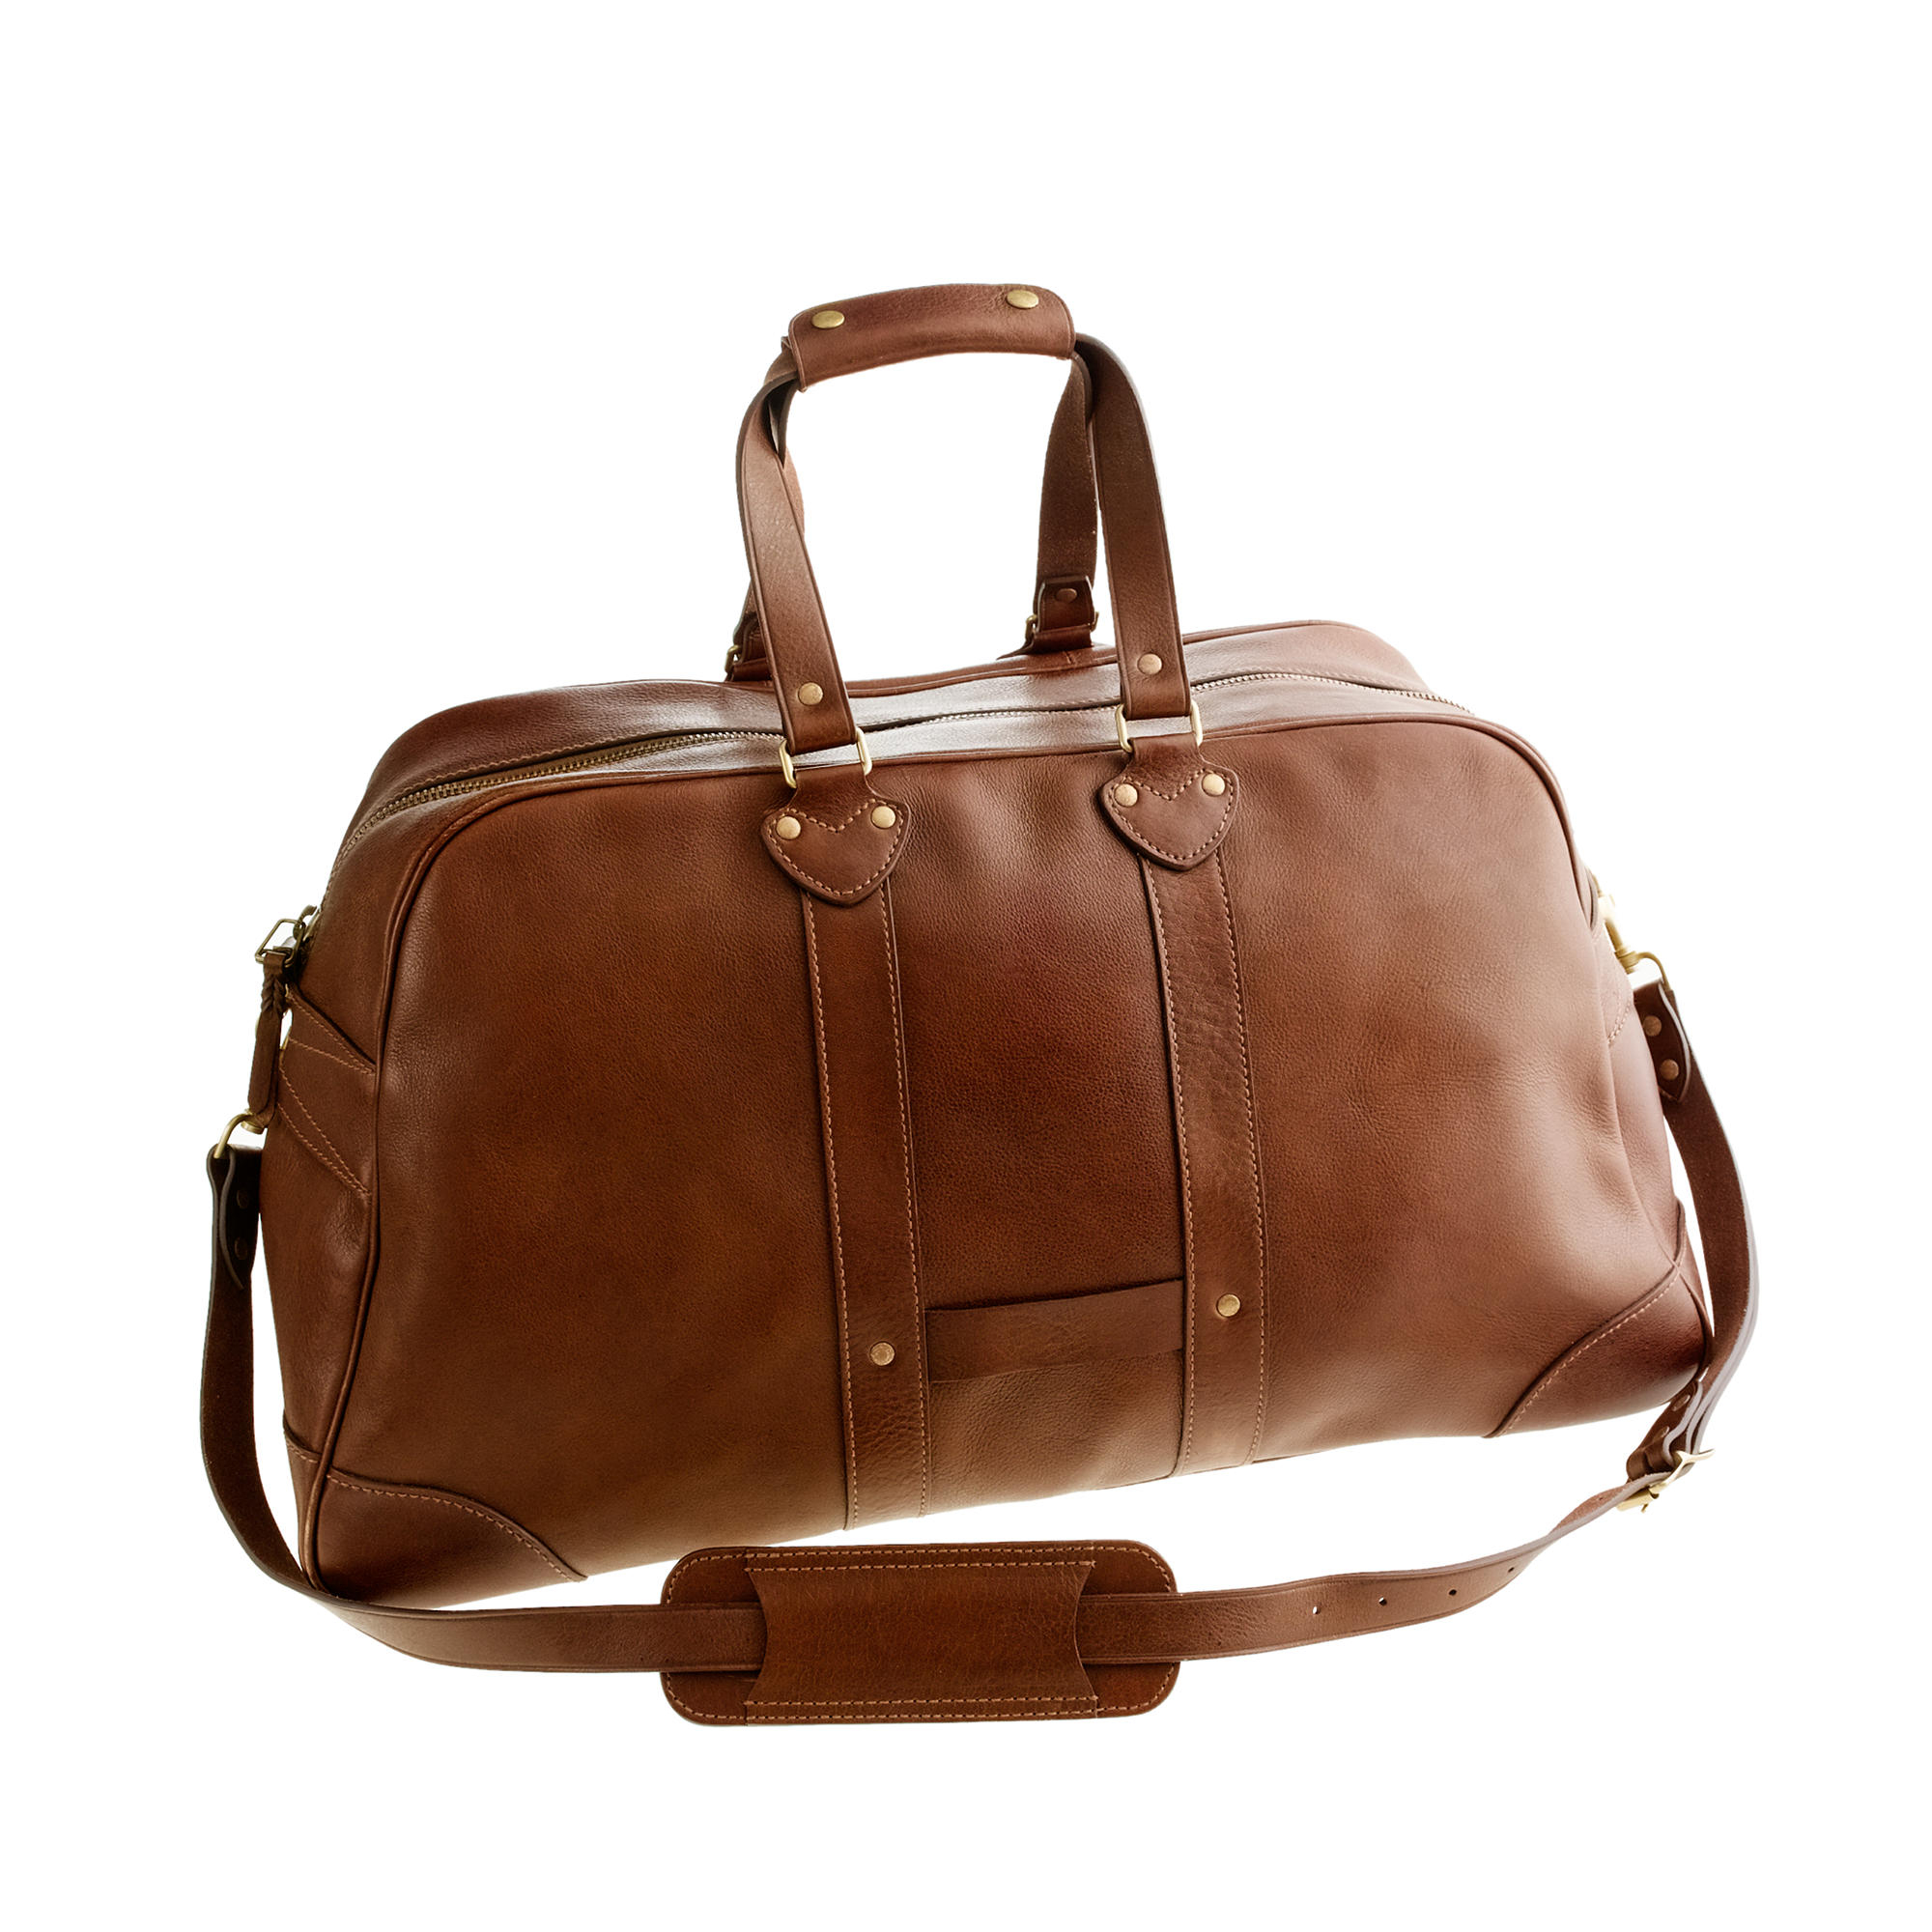 Lyst - J.Crew Montague Leather Weekender Bag in Brown for Men